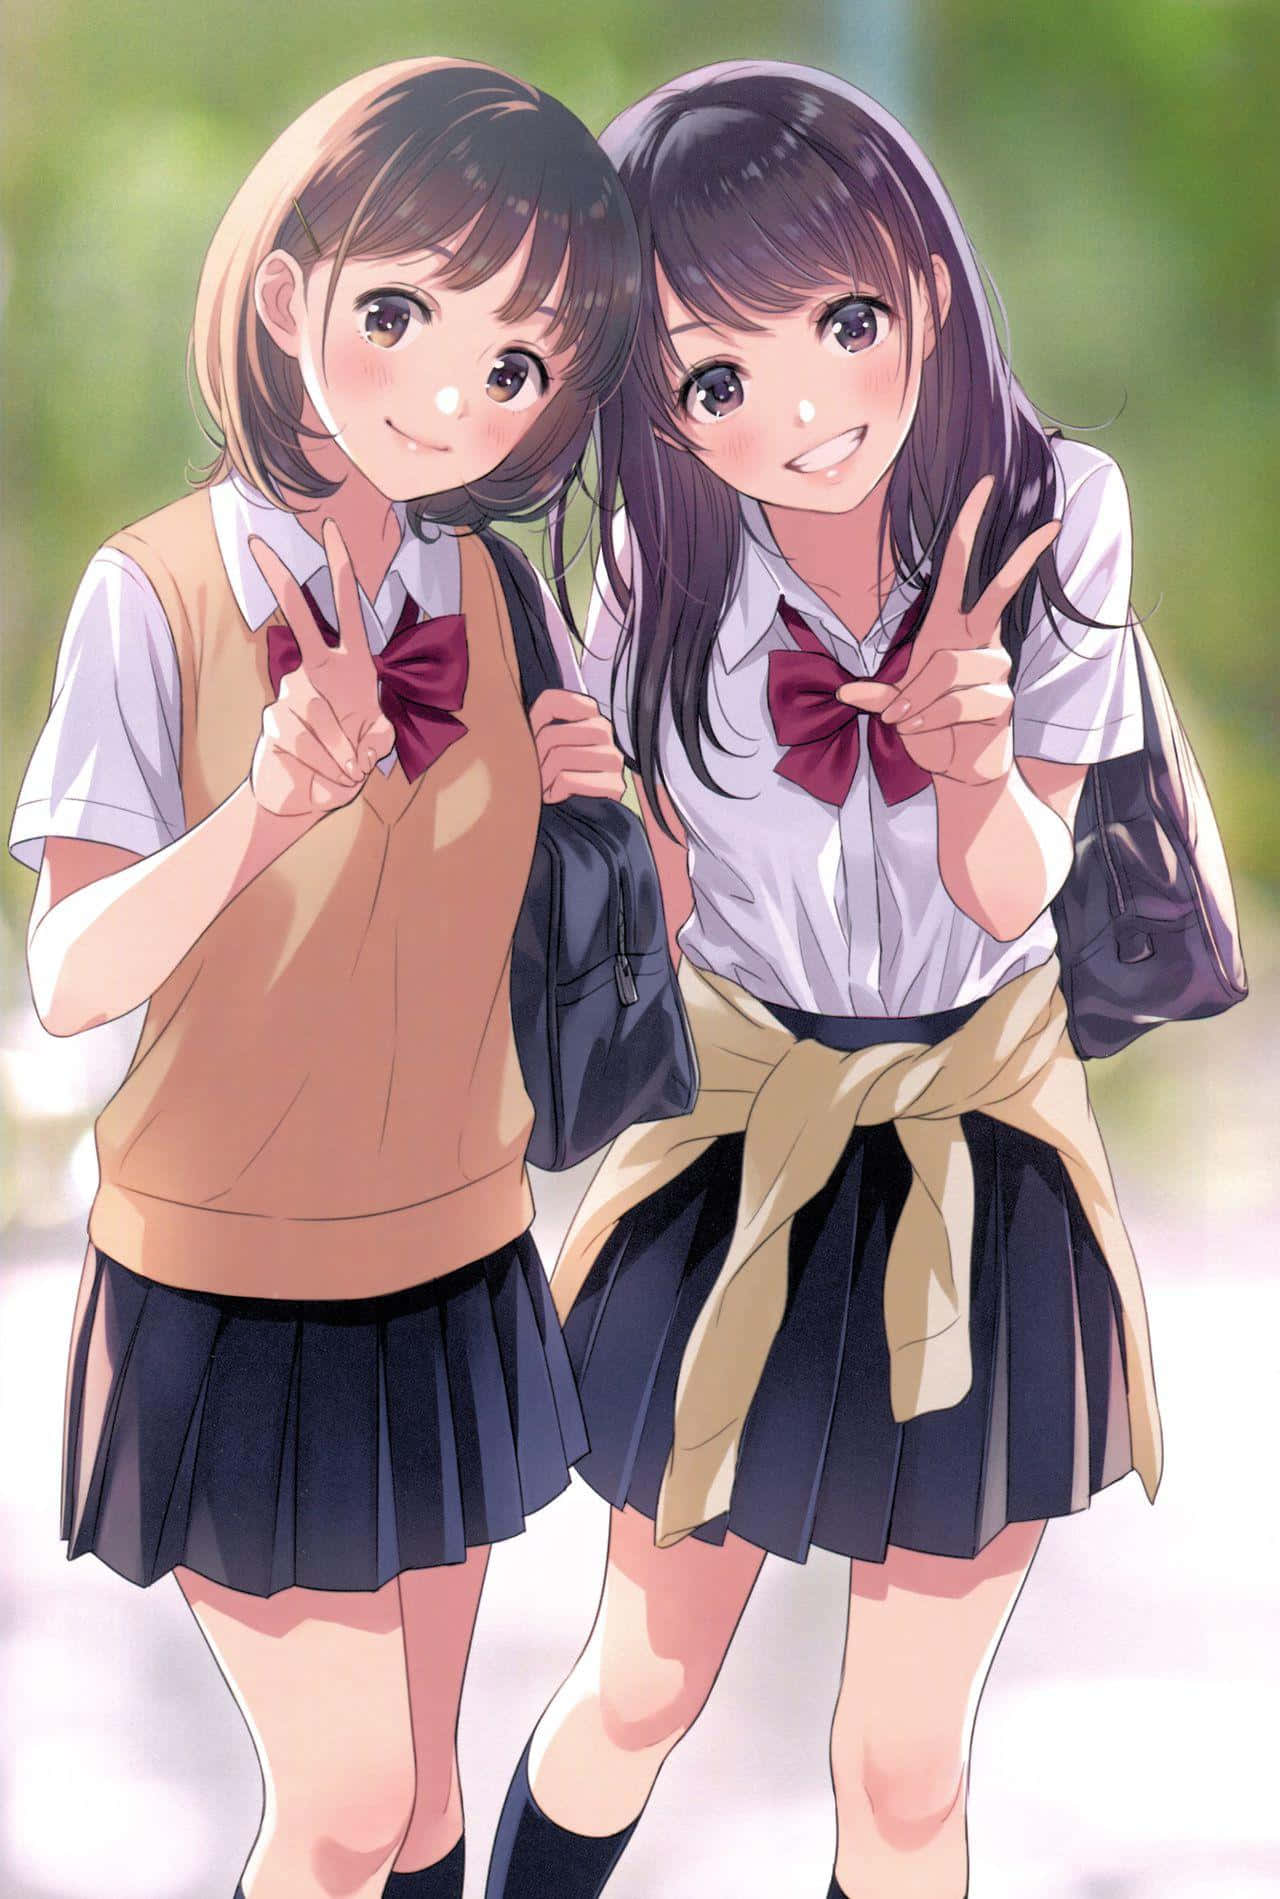 A Cute And Kawaii Anime Girl Background